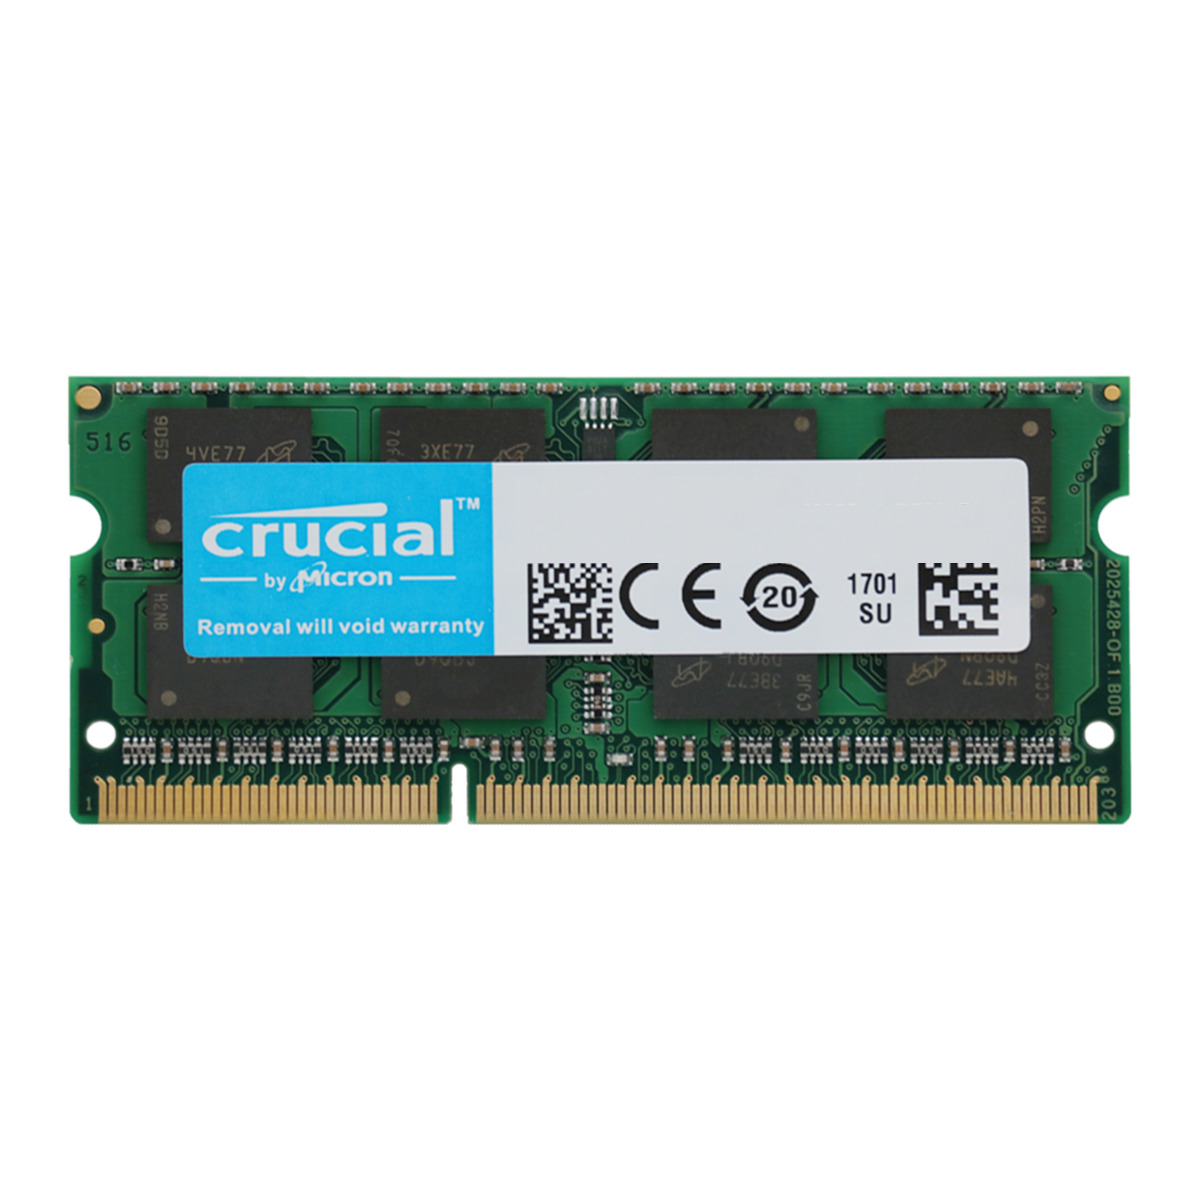 CRUCIAL 16GB 1600MHZ DDR3L PC3L-12800S SODIMM Laptop Memory Ram CT204864BF160B